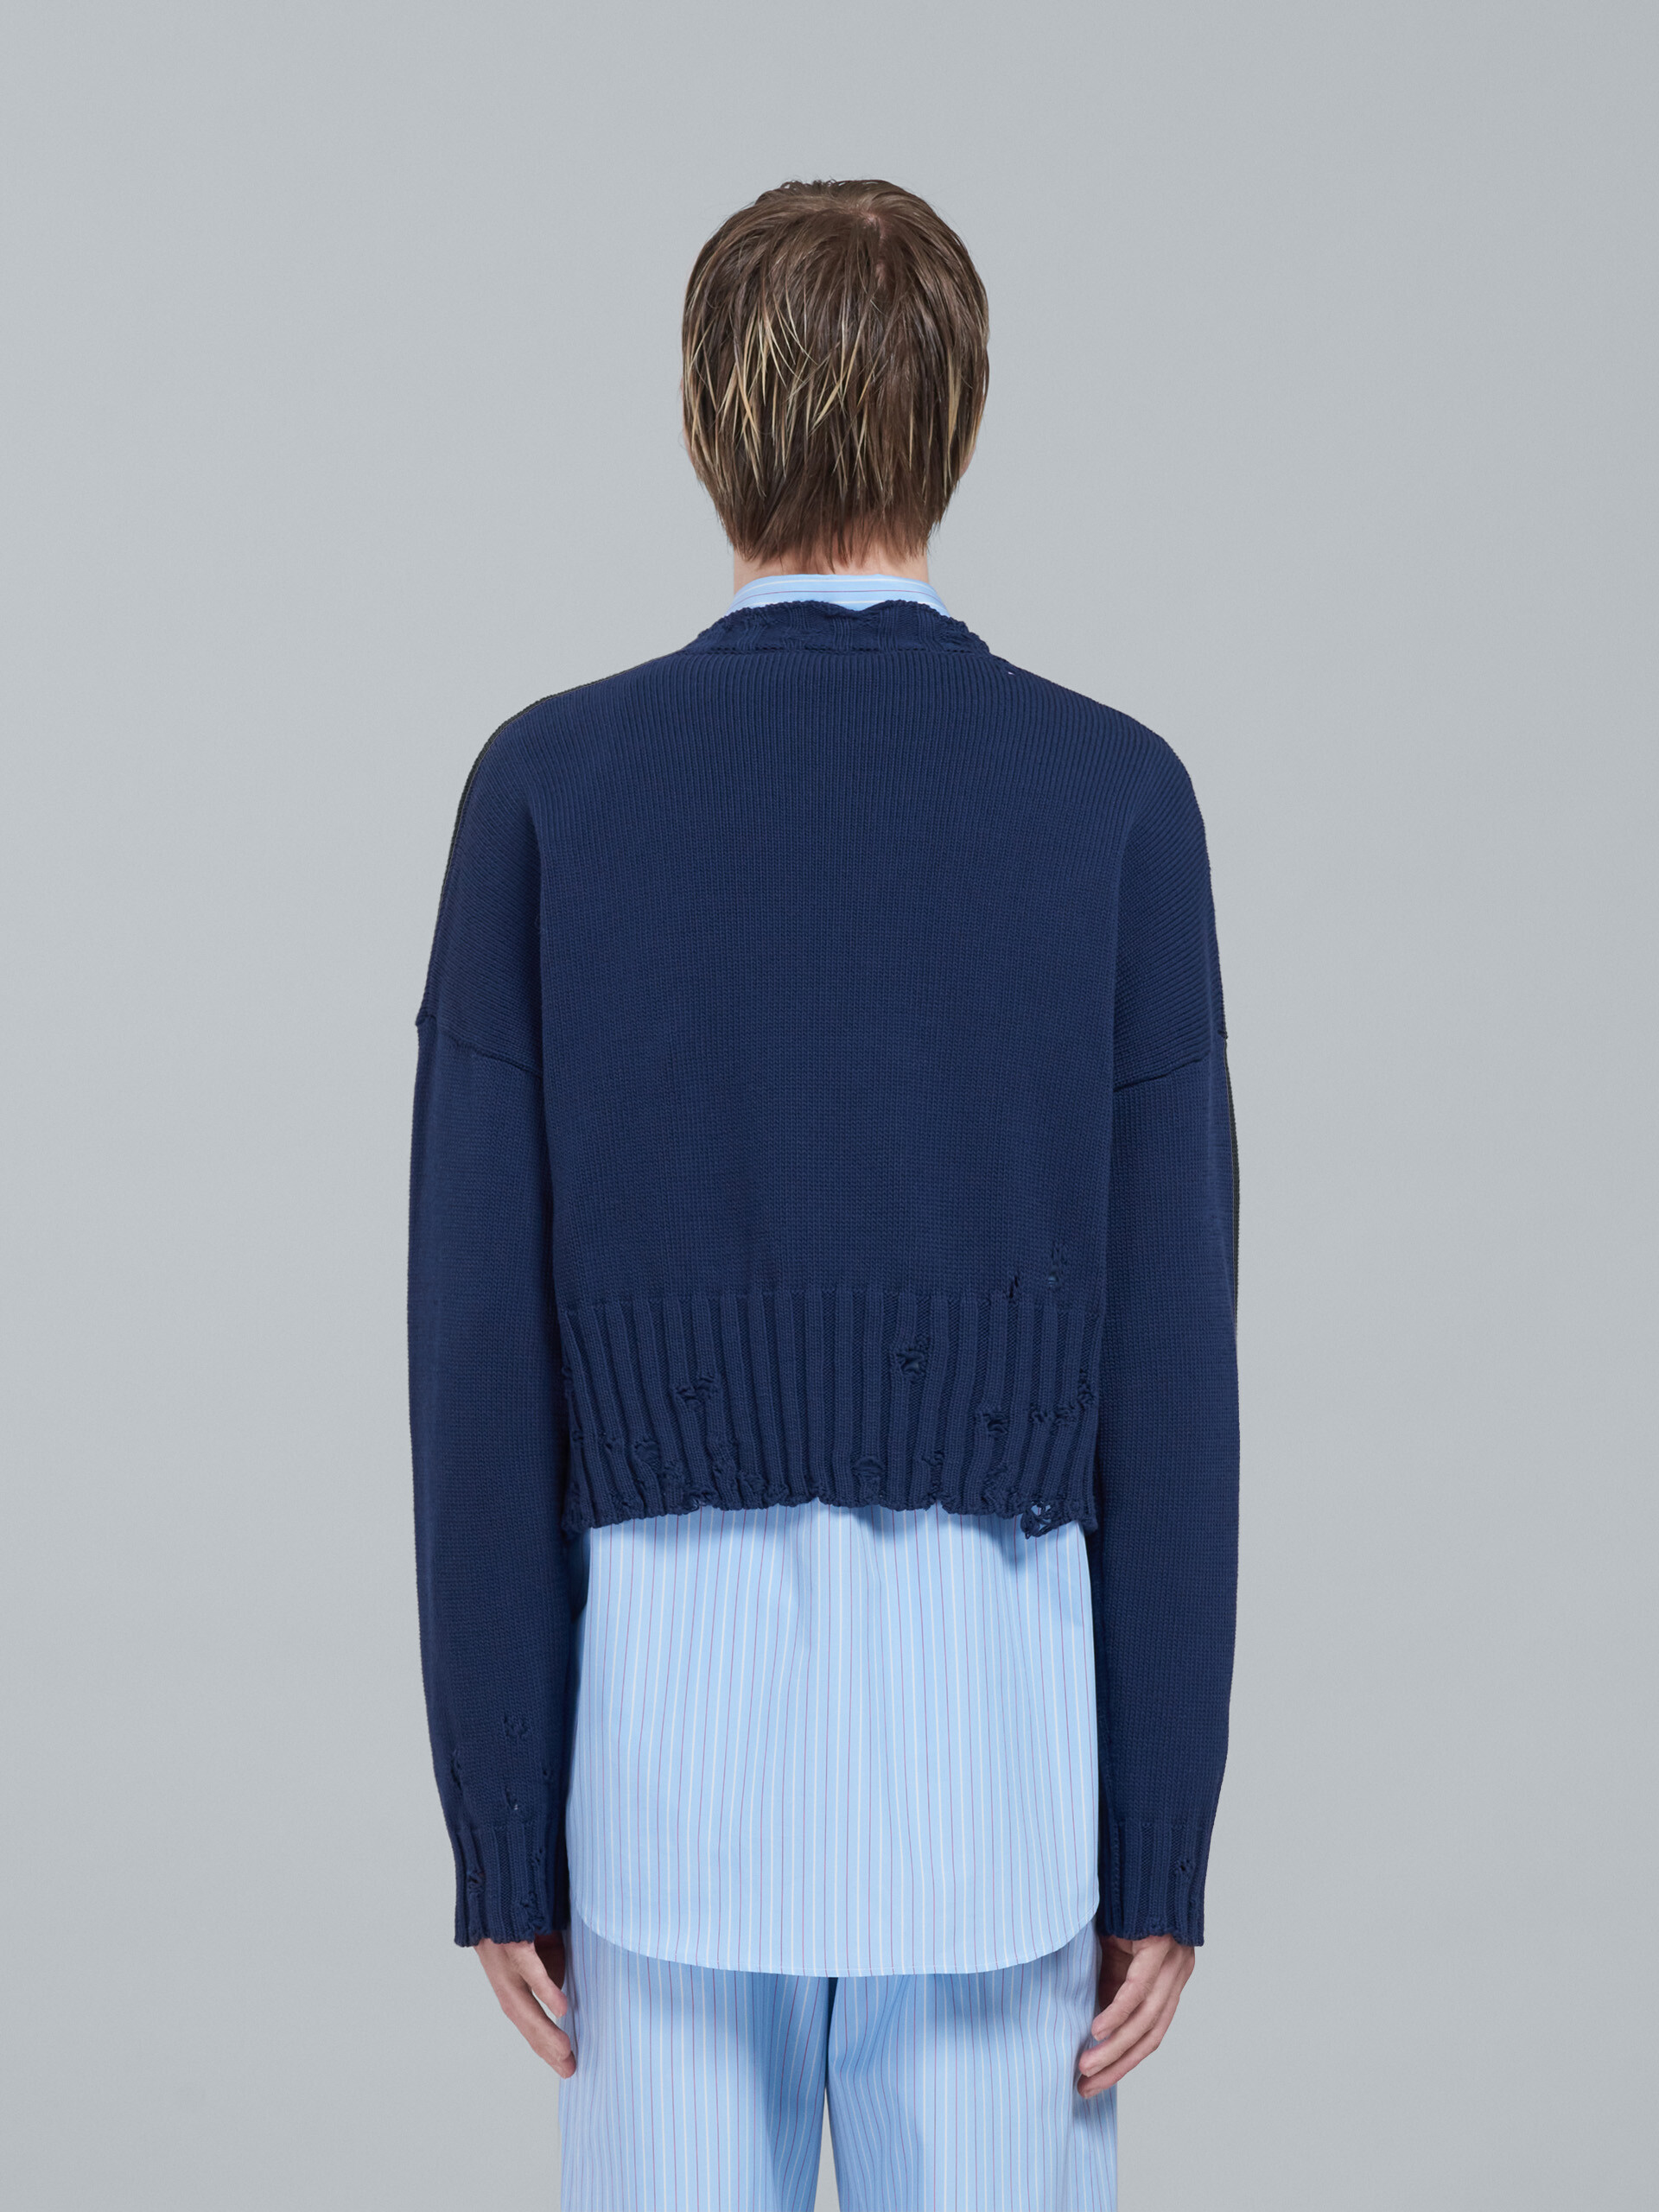 Blue cotton crewneck sweater - Pullovers - Image 3